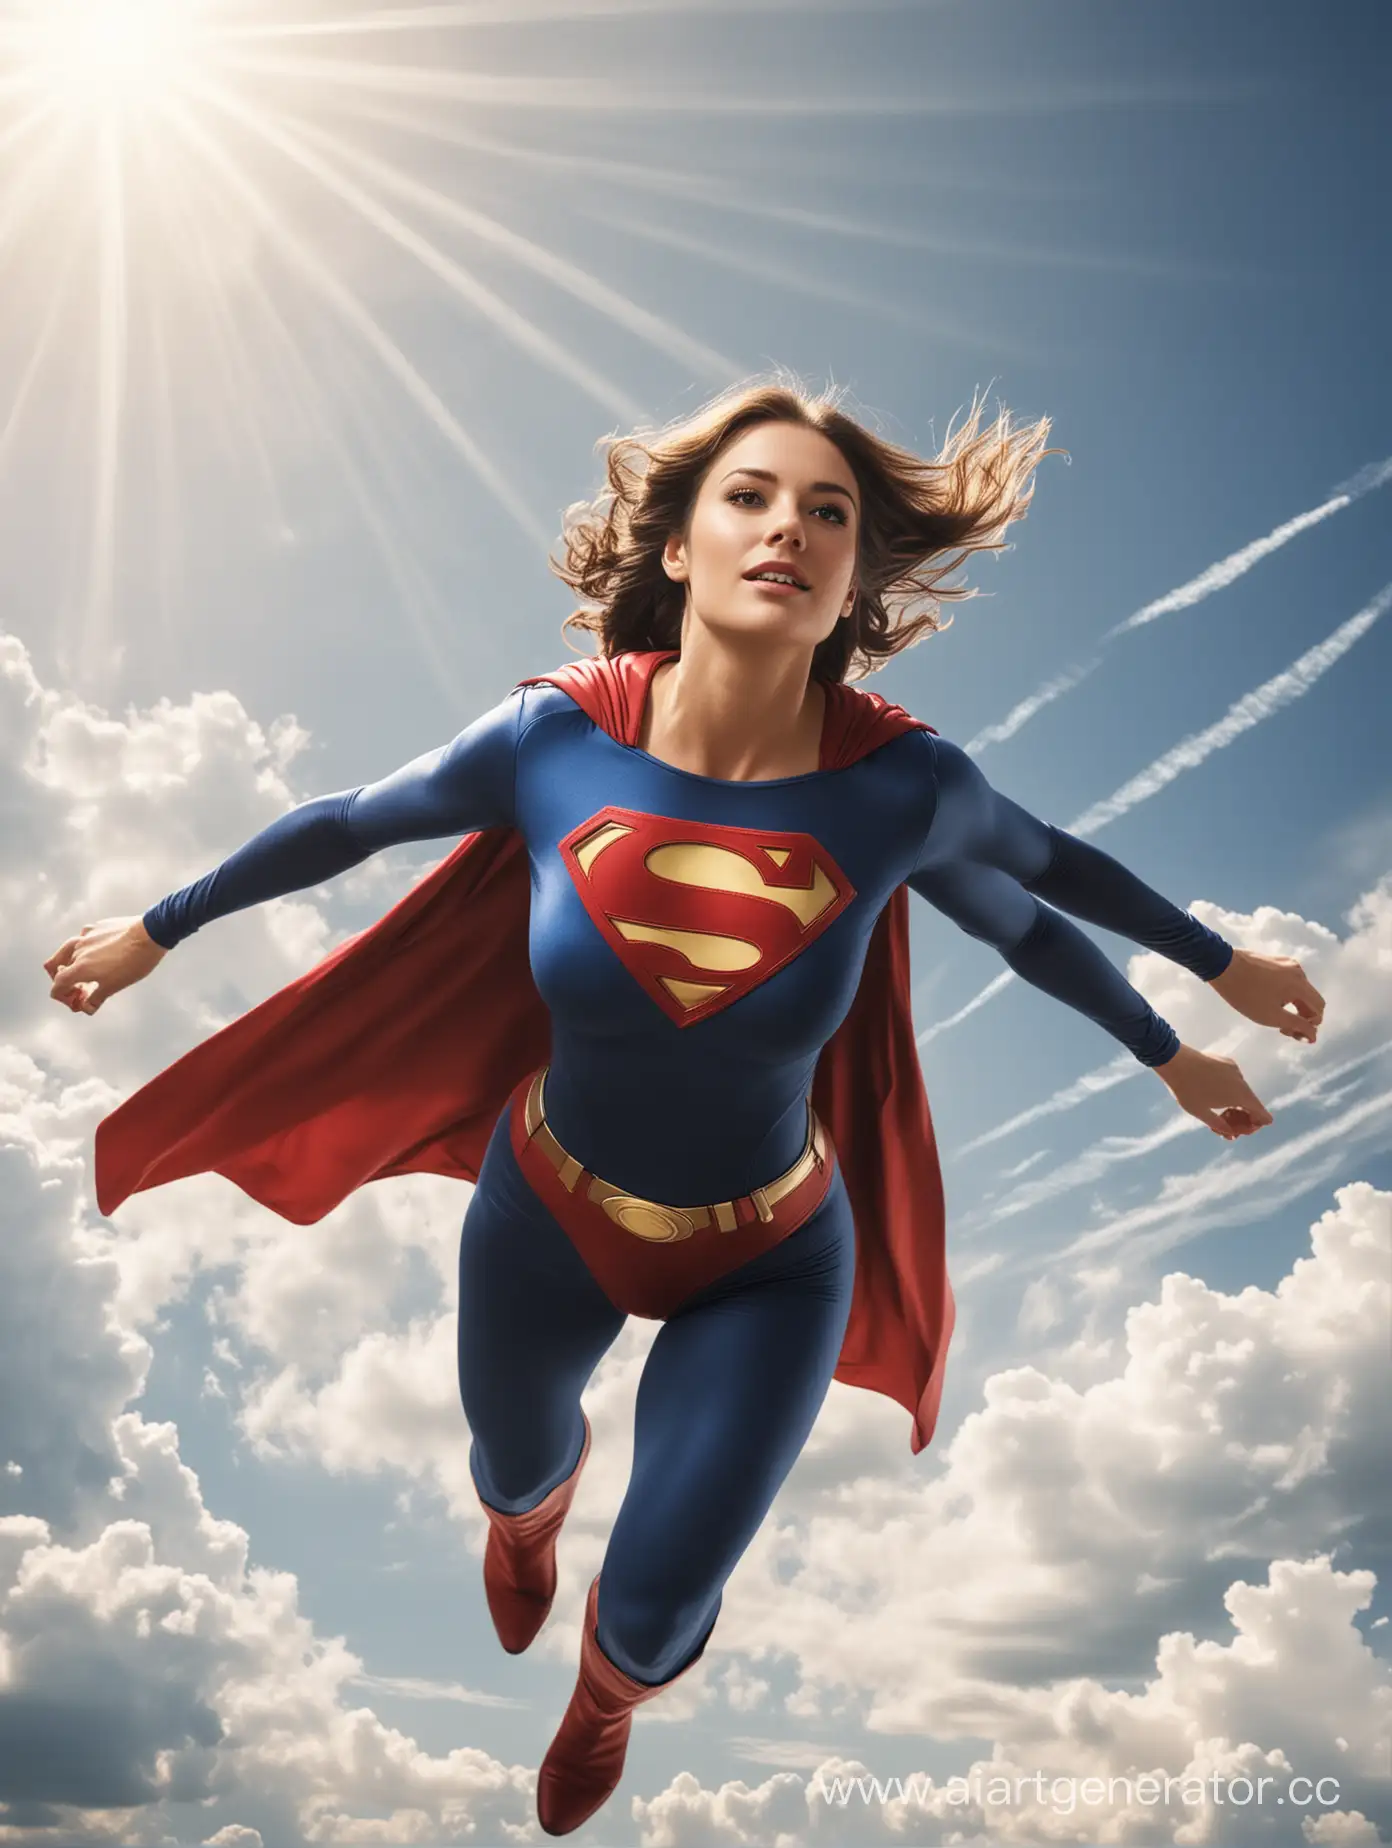 30YearOld-Woman-in-Superman-Costume-Soaring-Through-Clouds